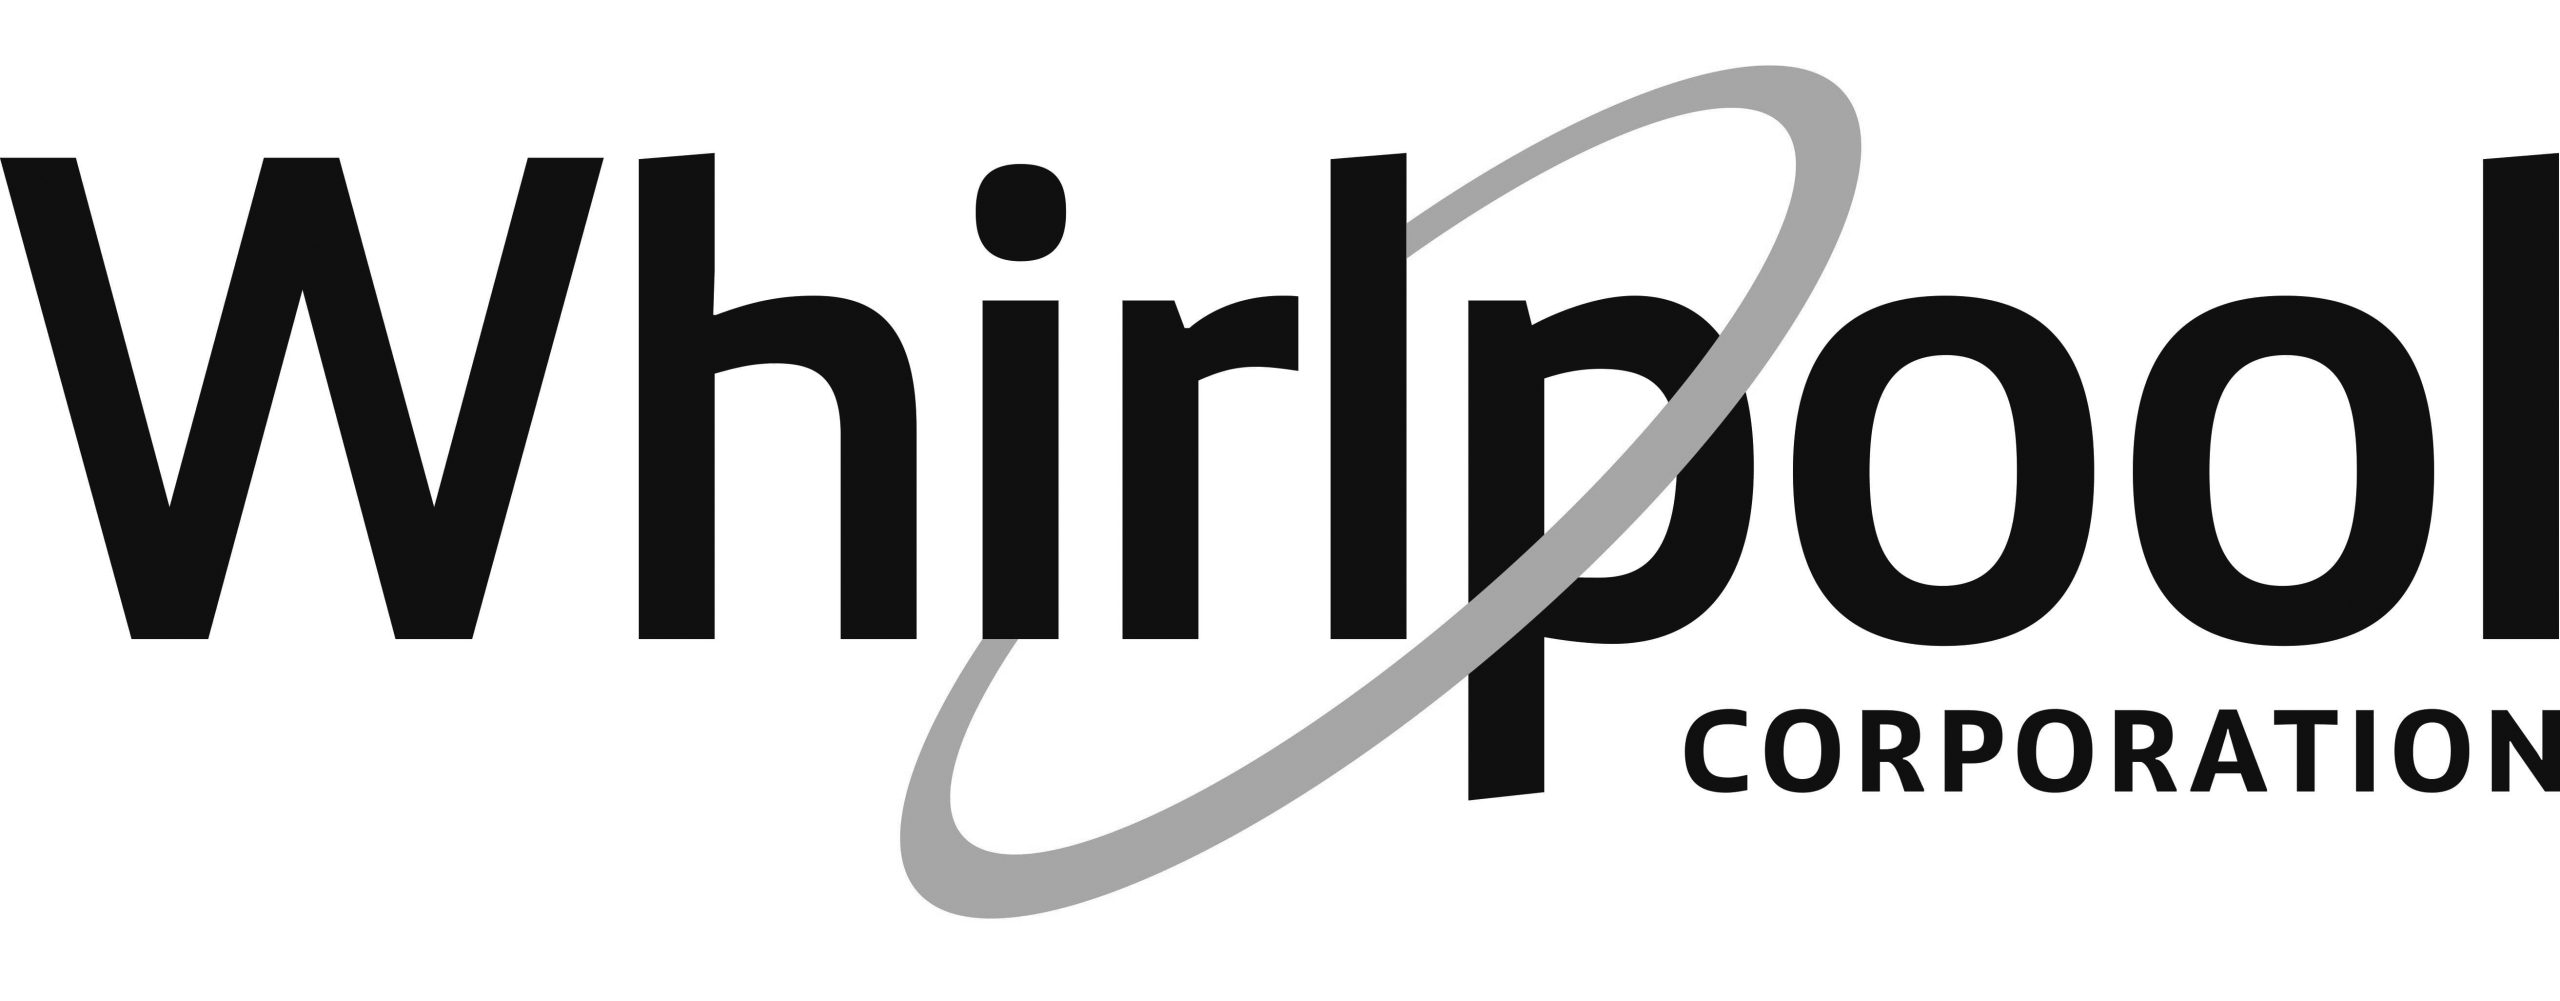 Wrap My Kitchen™ - whirlpool logo scaled